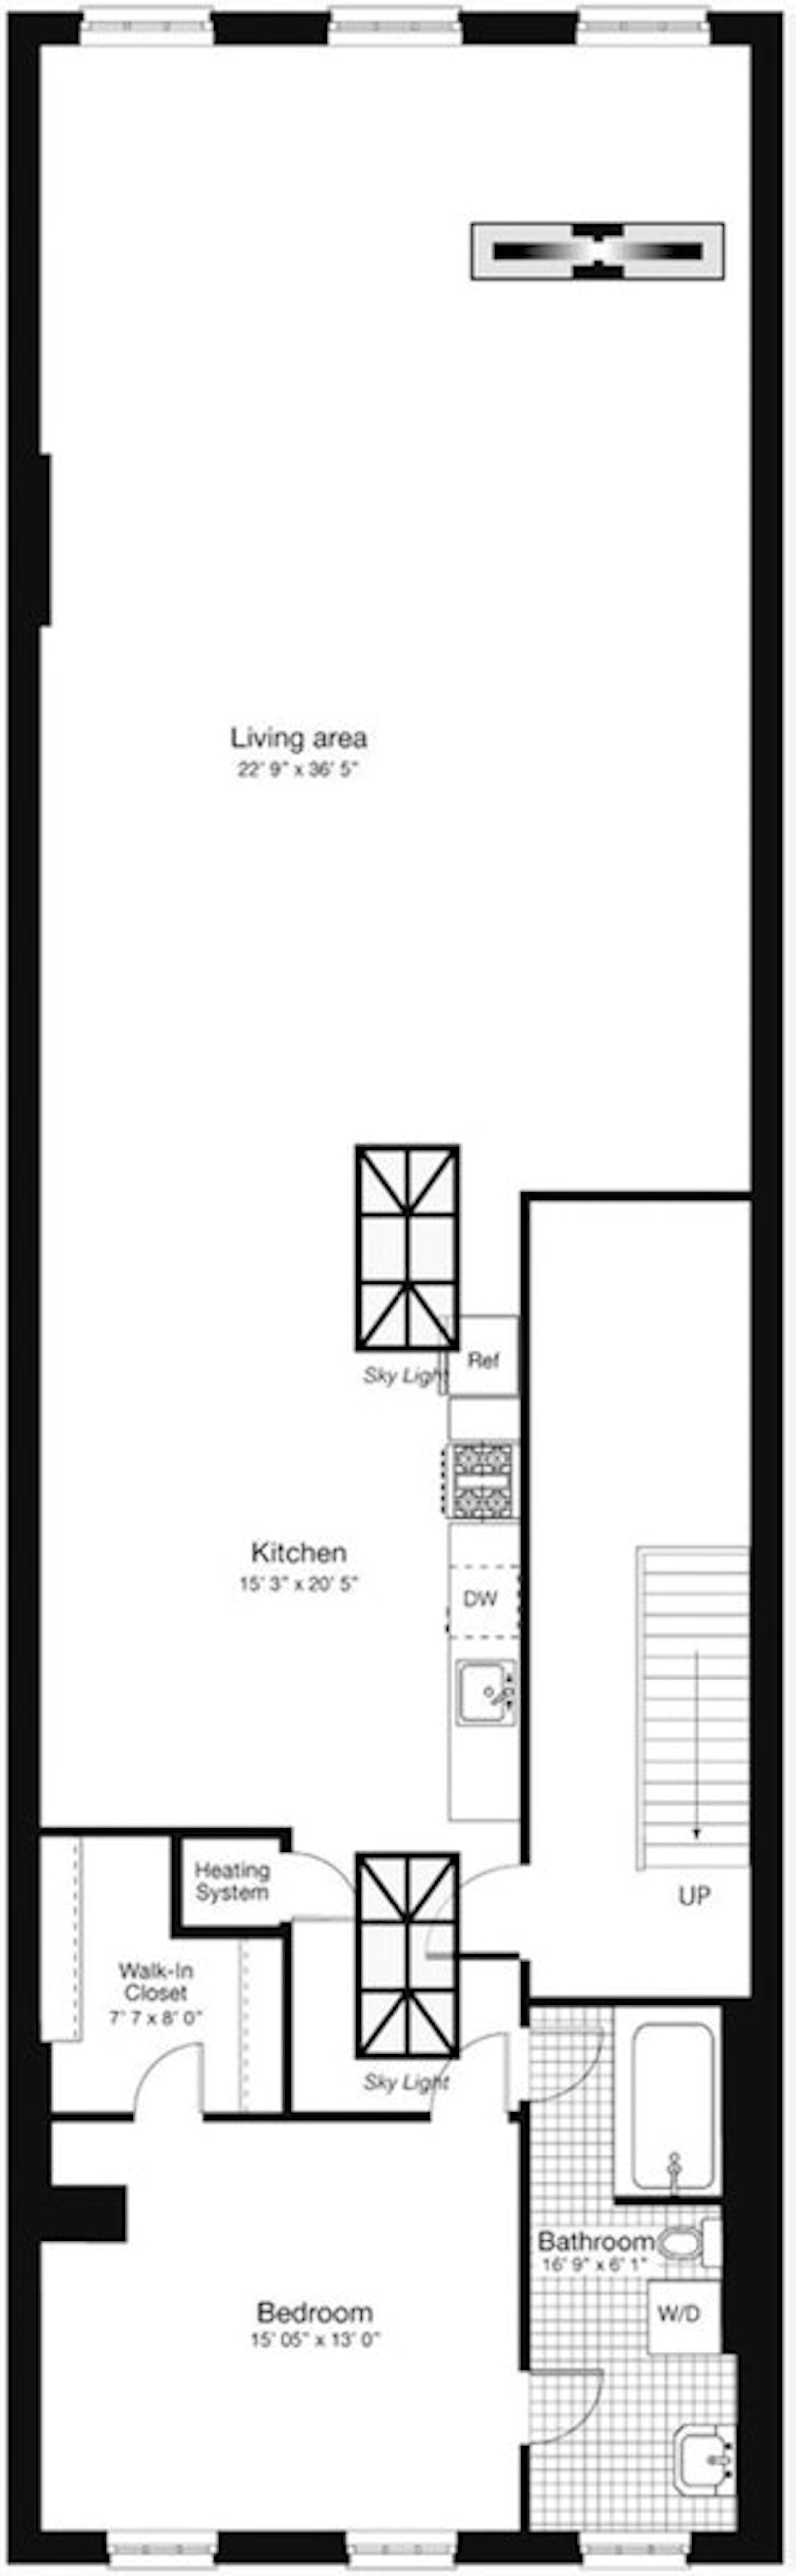 Floorplan for 56 Lispenard Street